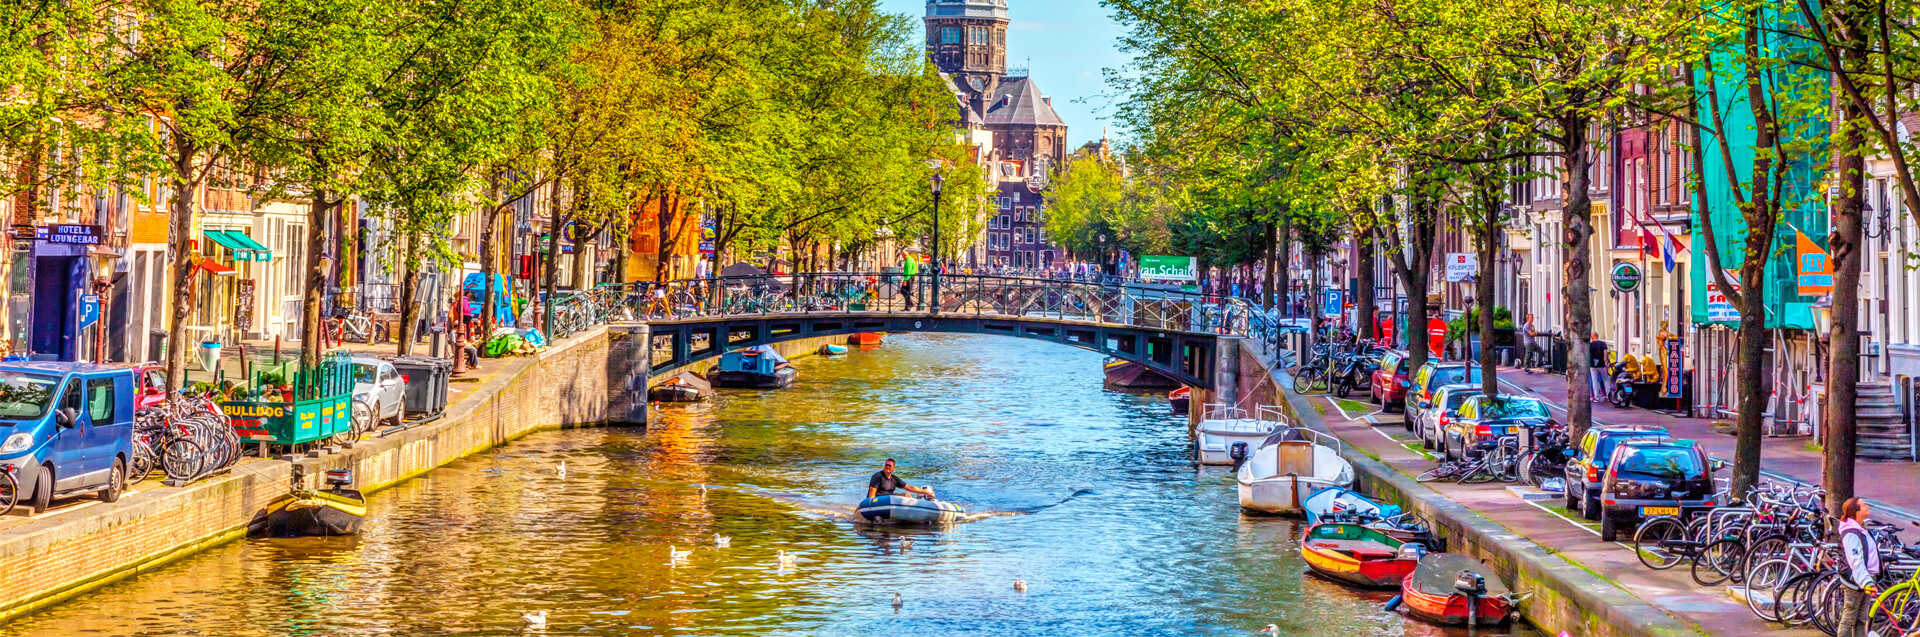 Amsterdam_canal_cruise_L